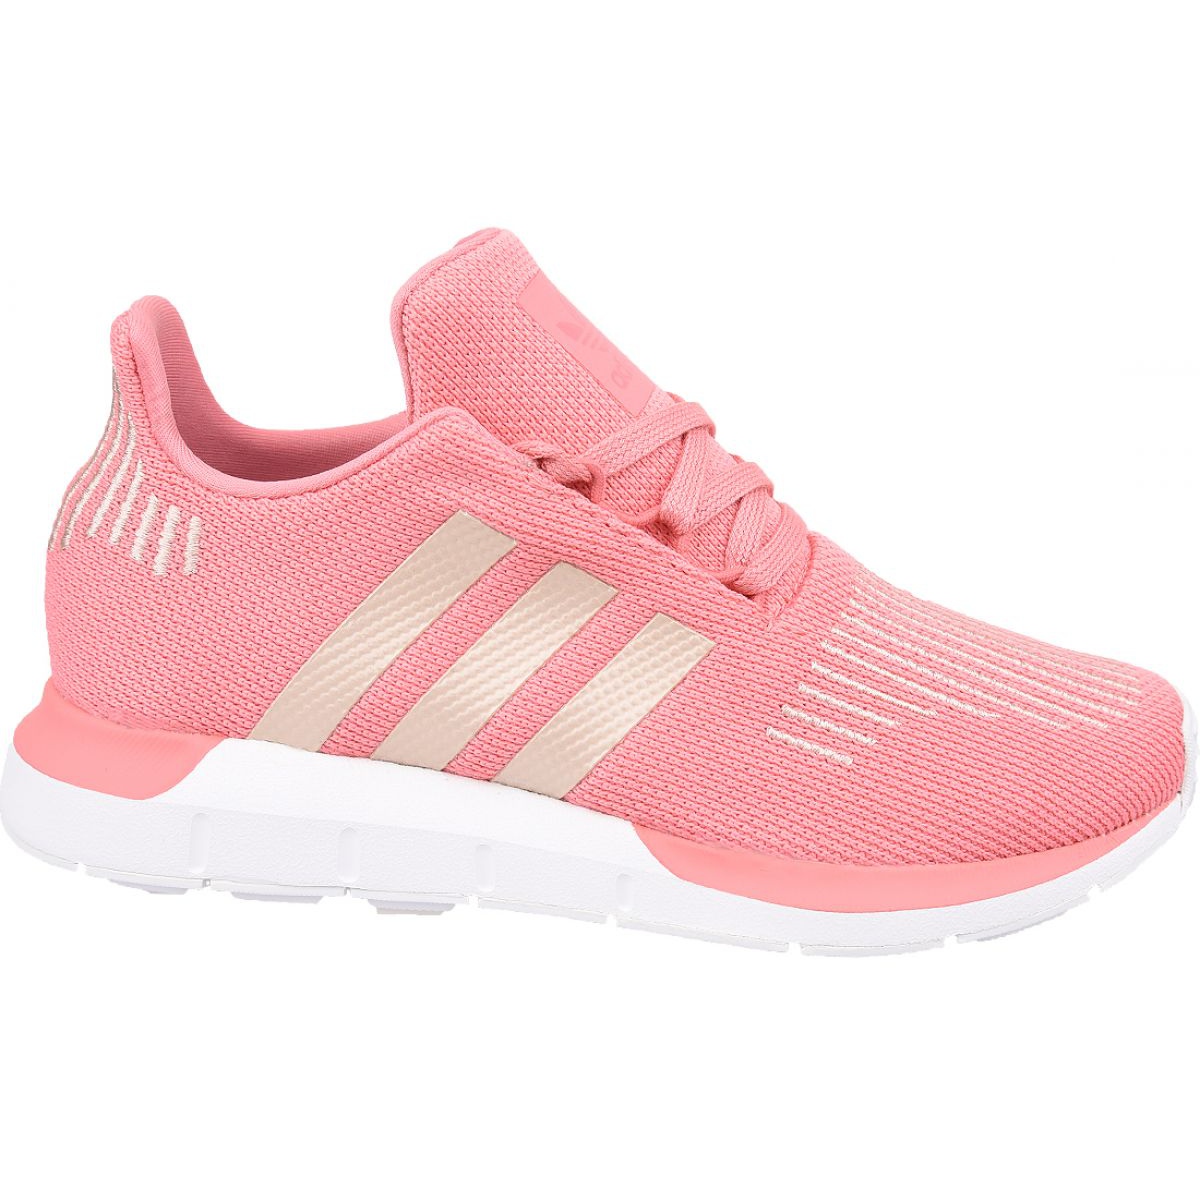 adidas swift run shoes pink